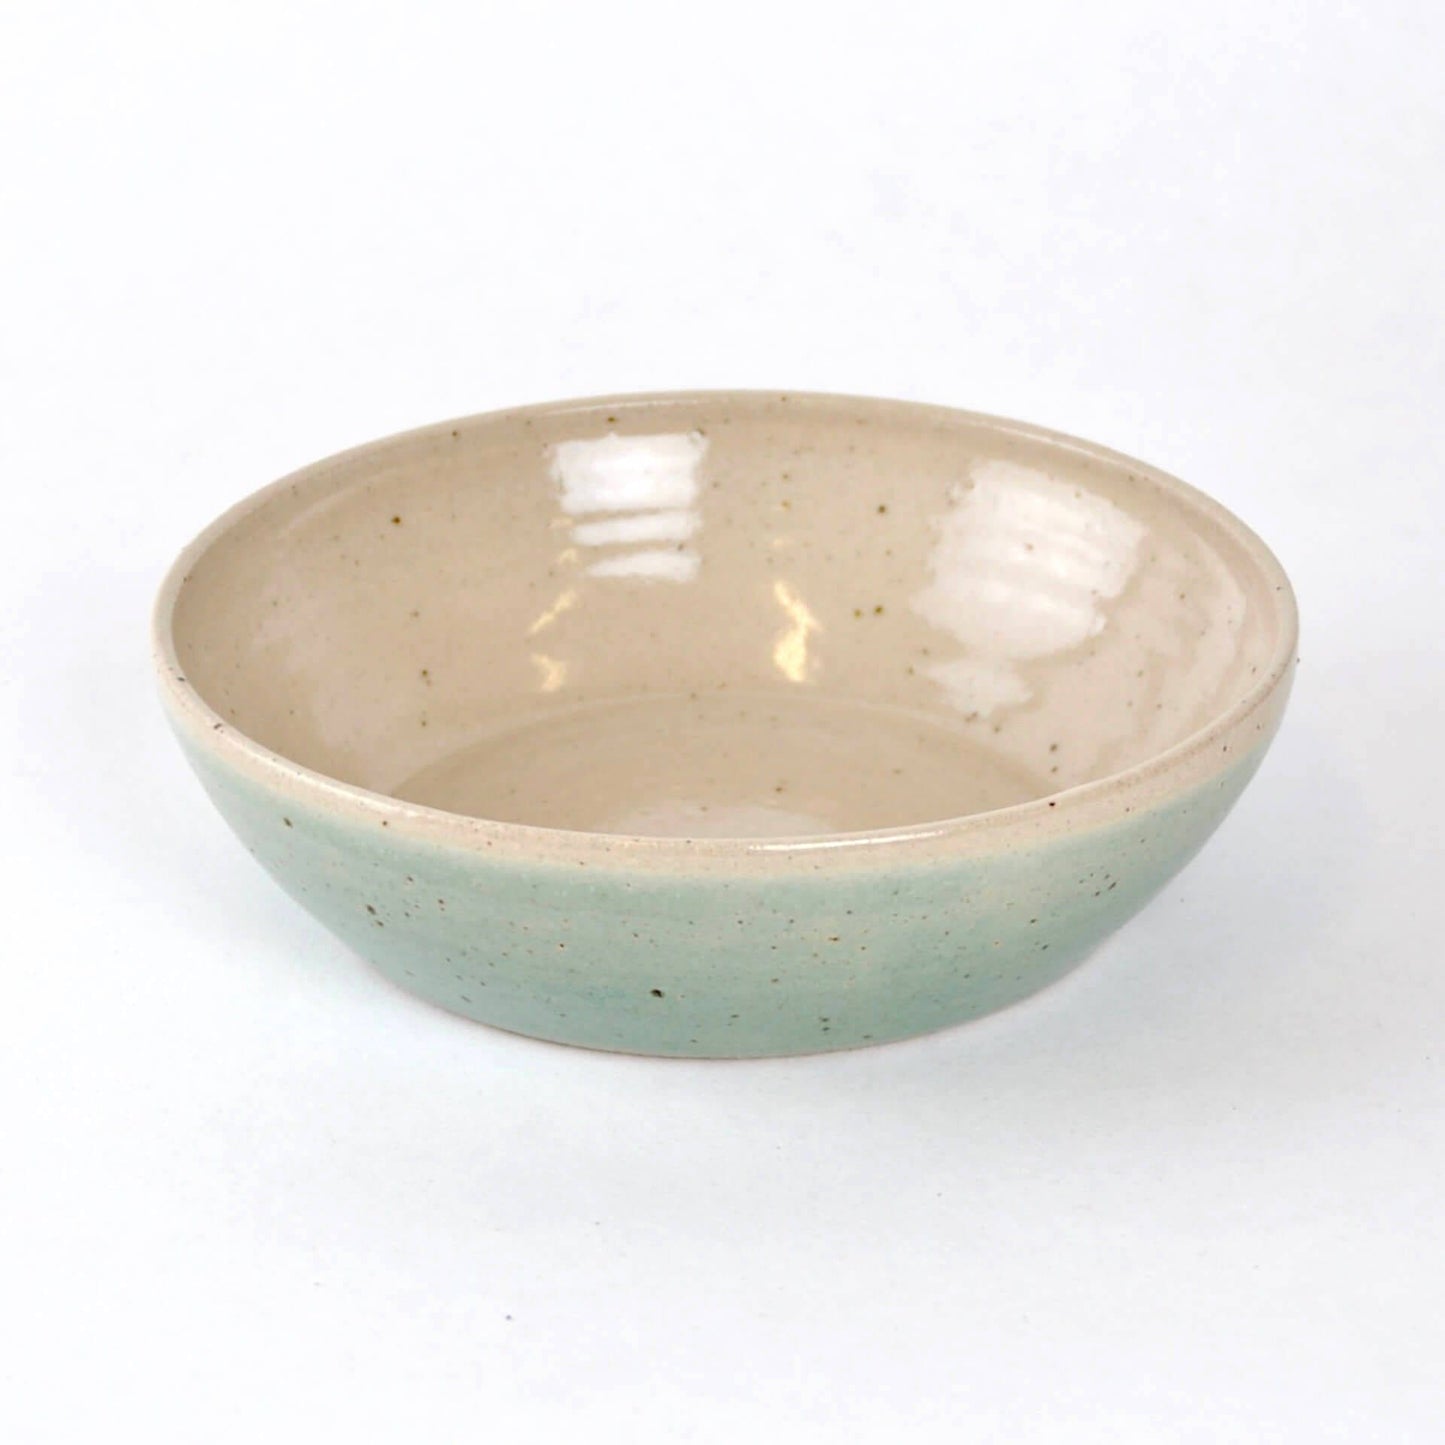 The Village Pottery Ceramic Pasta Bowl (6 colour options)